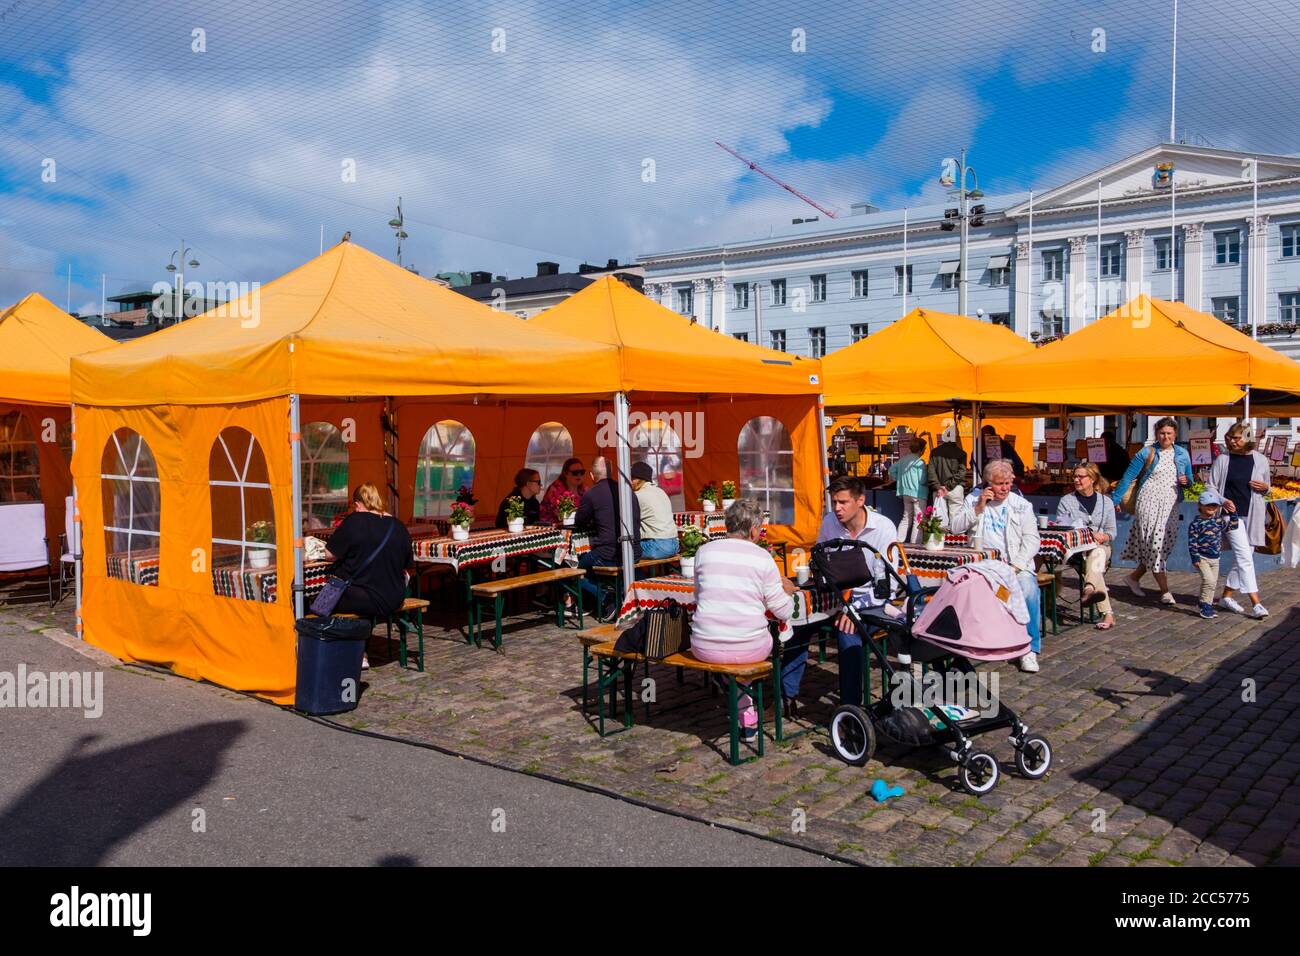 Cafe, Kauppatori, central market square, Helsinki, Finland Stock Photo